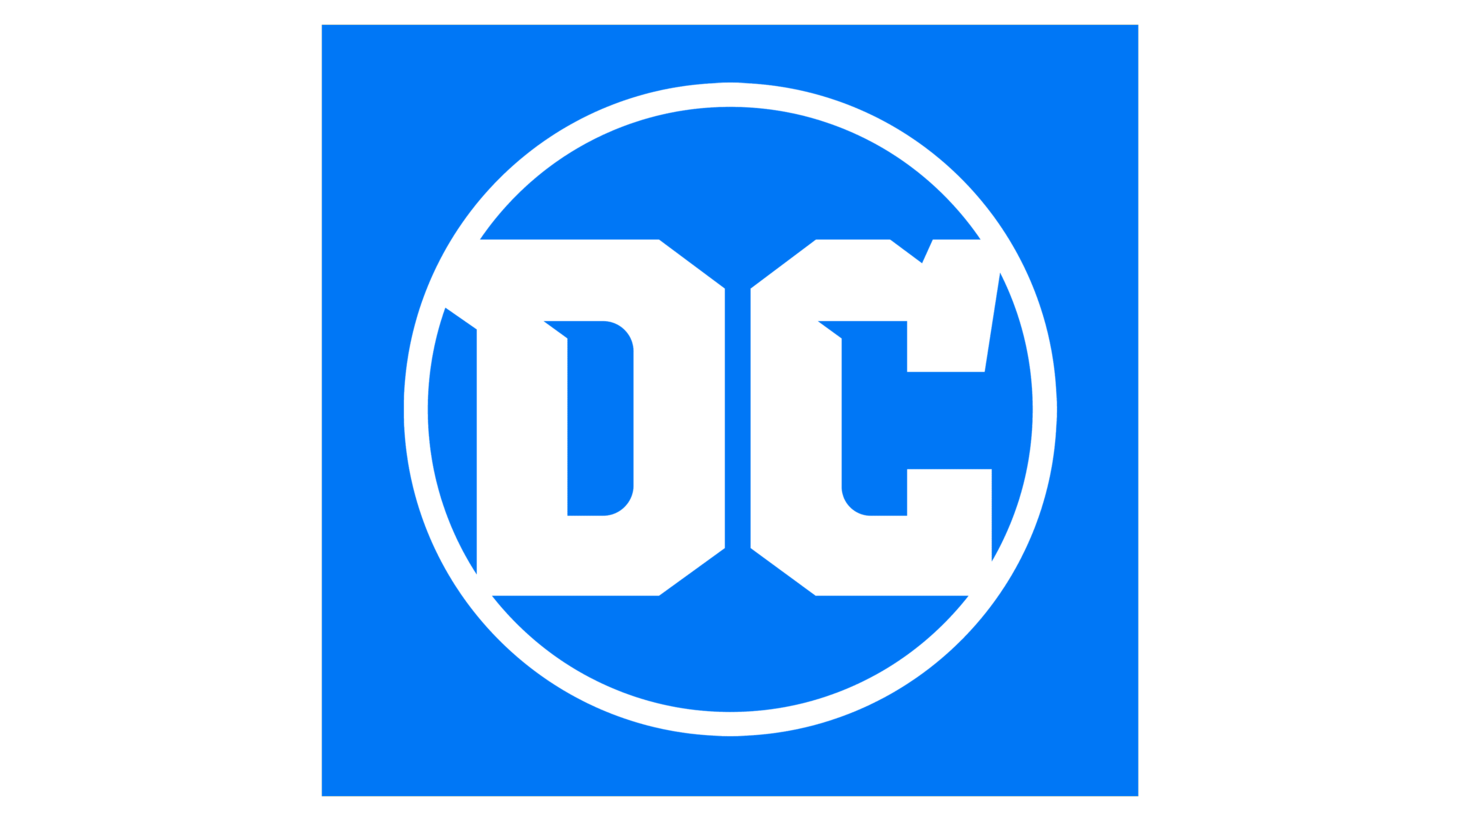 Dc symbol